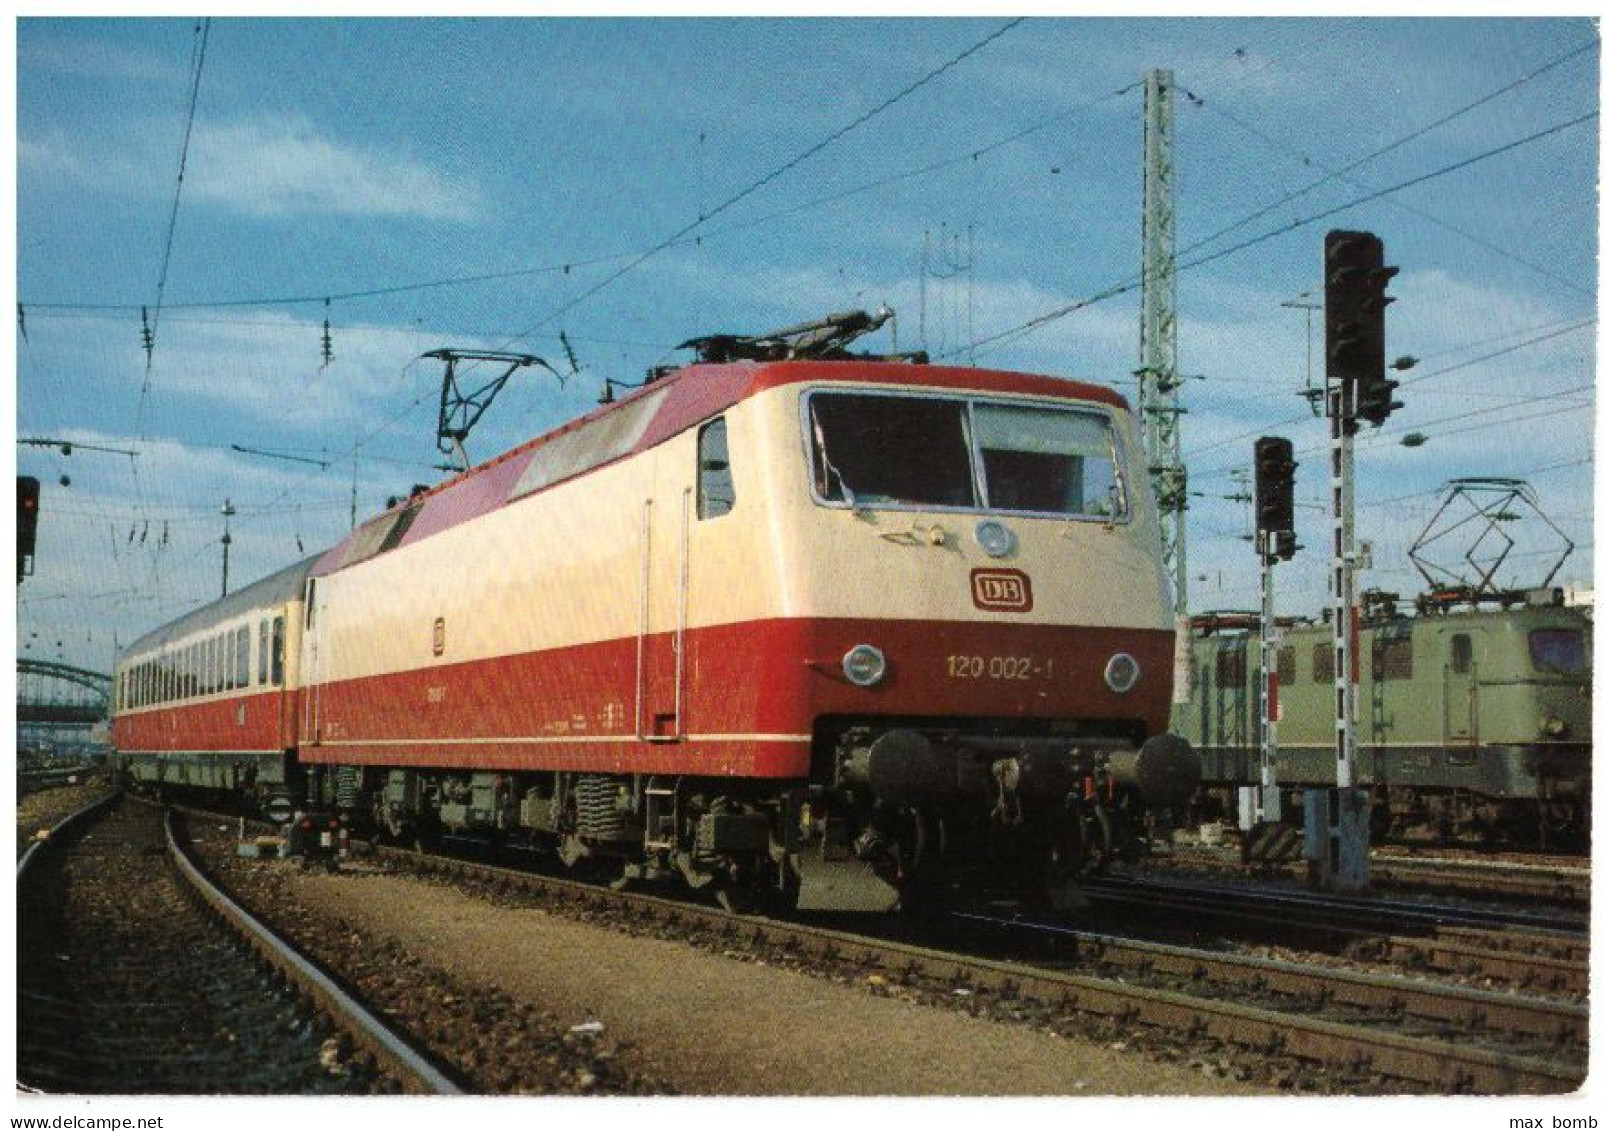 1981 TRENO GERMANIA DB ELEKTRISCHE UNIVERSALLOKOMOTIVE 120 002.1 LOCOMOTORE 106 - Trains